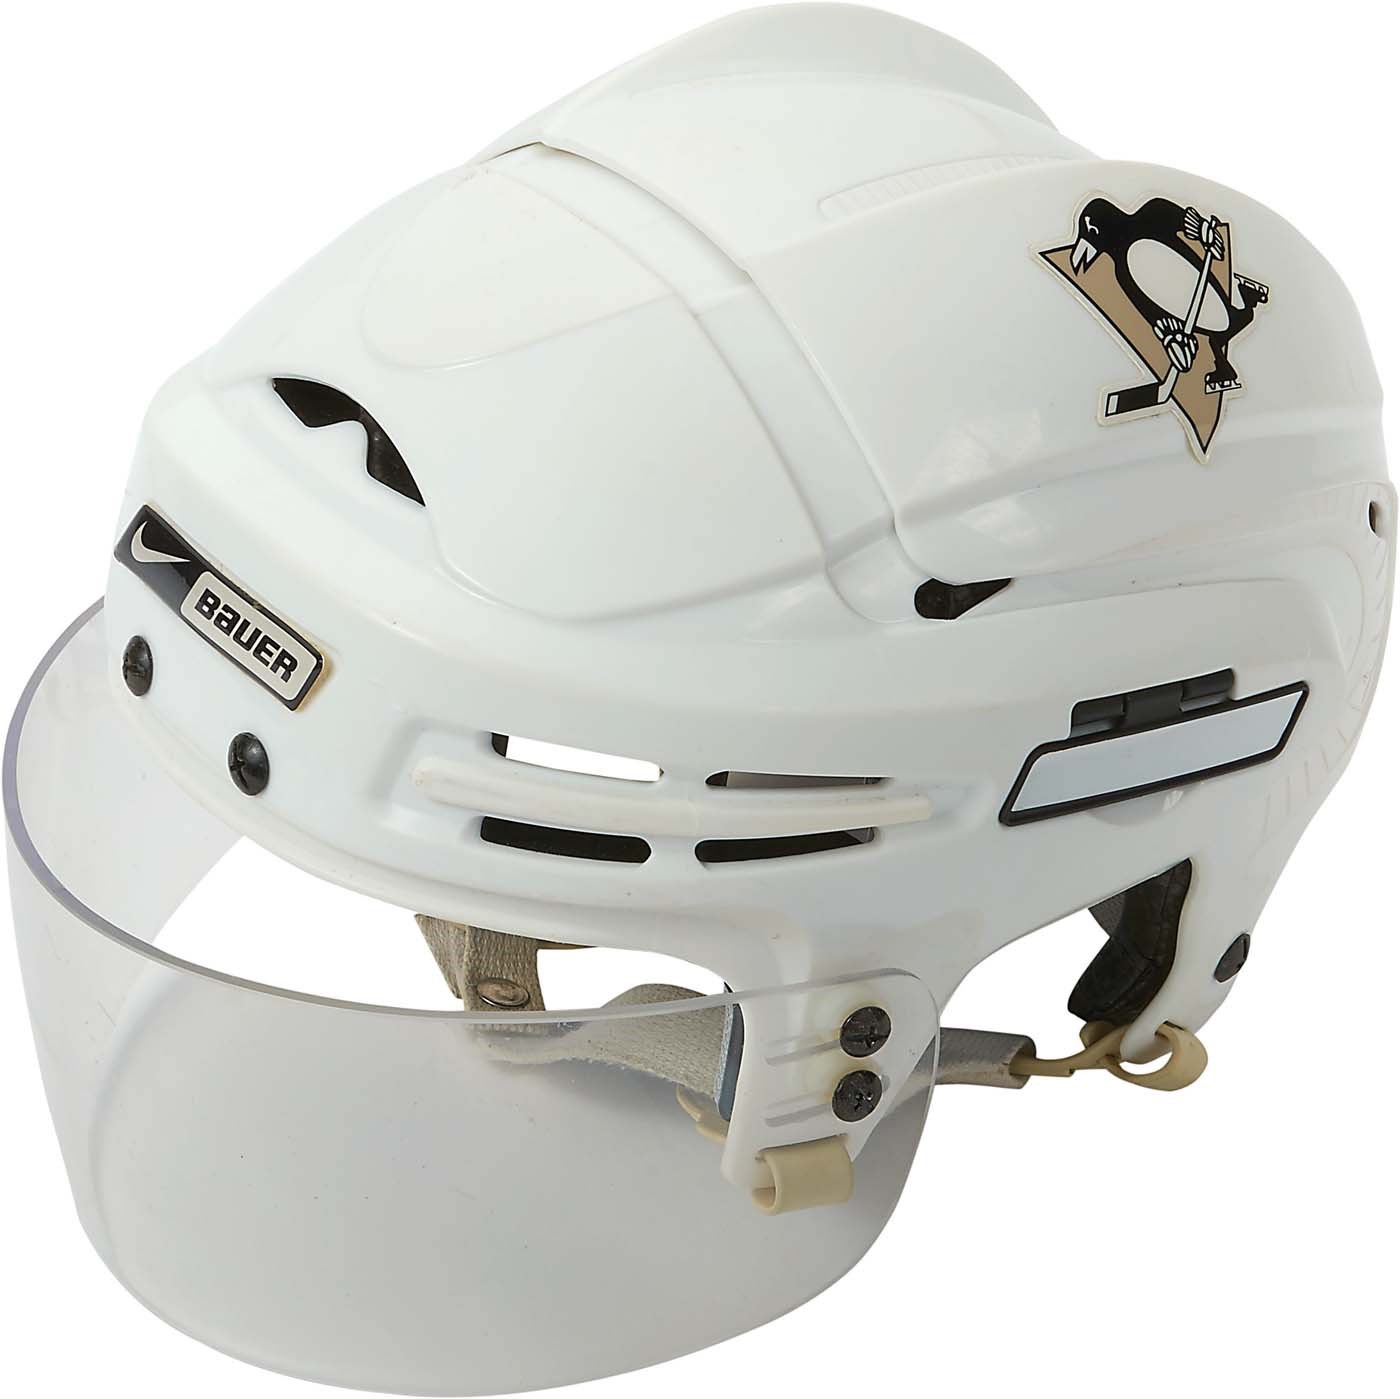 2009 Sergei Gonchar Game Worn Stanley Cup Finals Penguins Helmet (Photo-Matched)